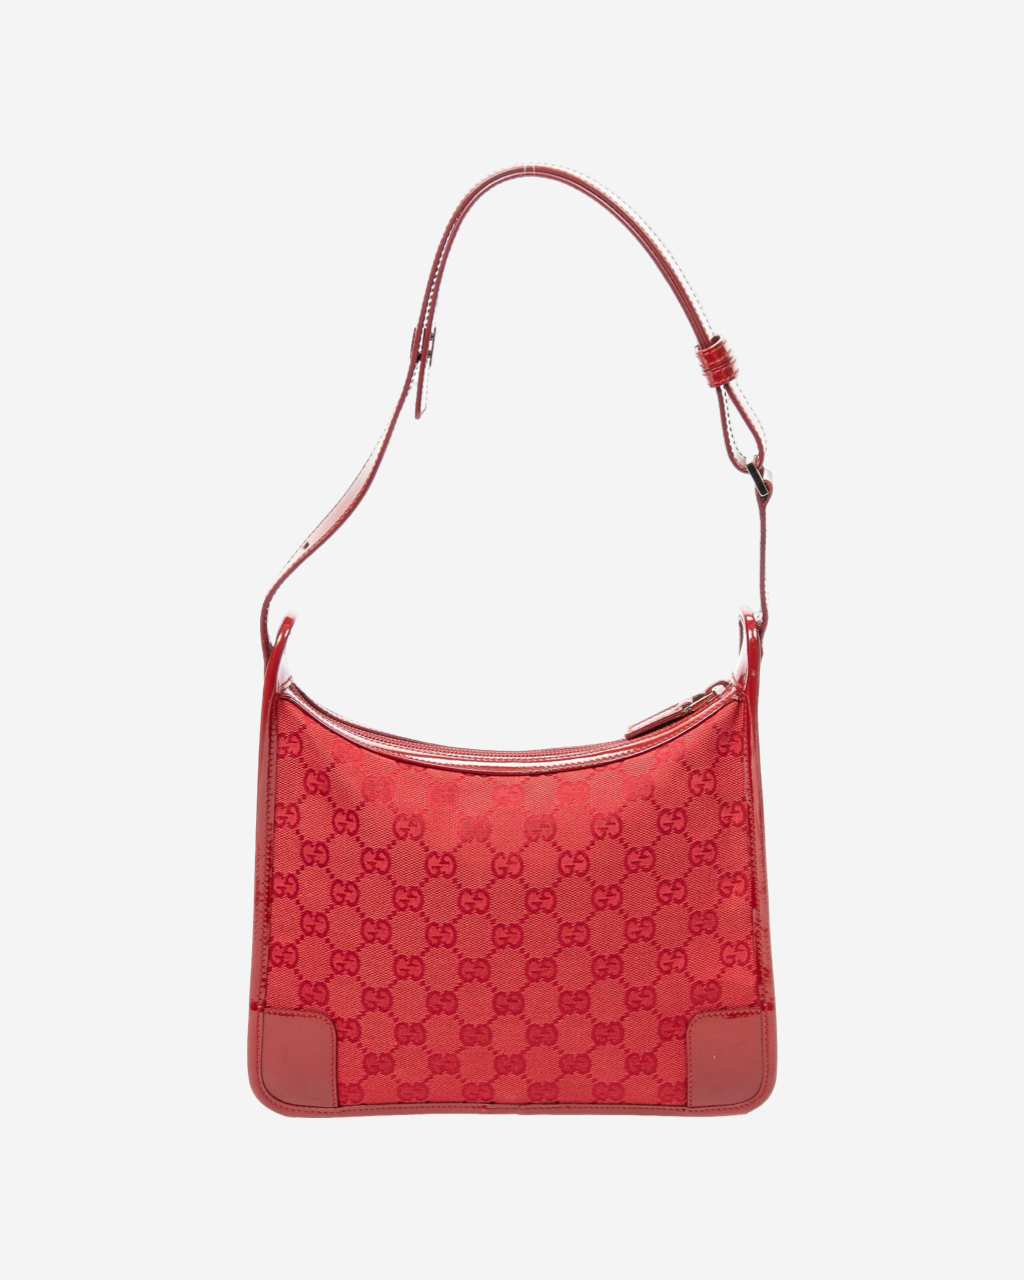 Gucci Small Zip Hobo Bag